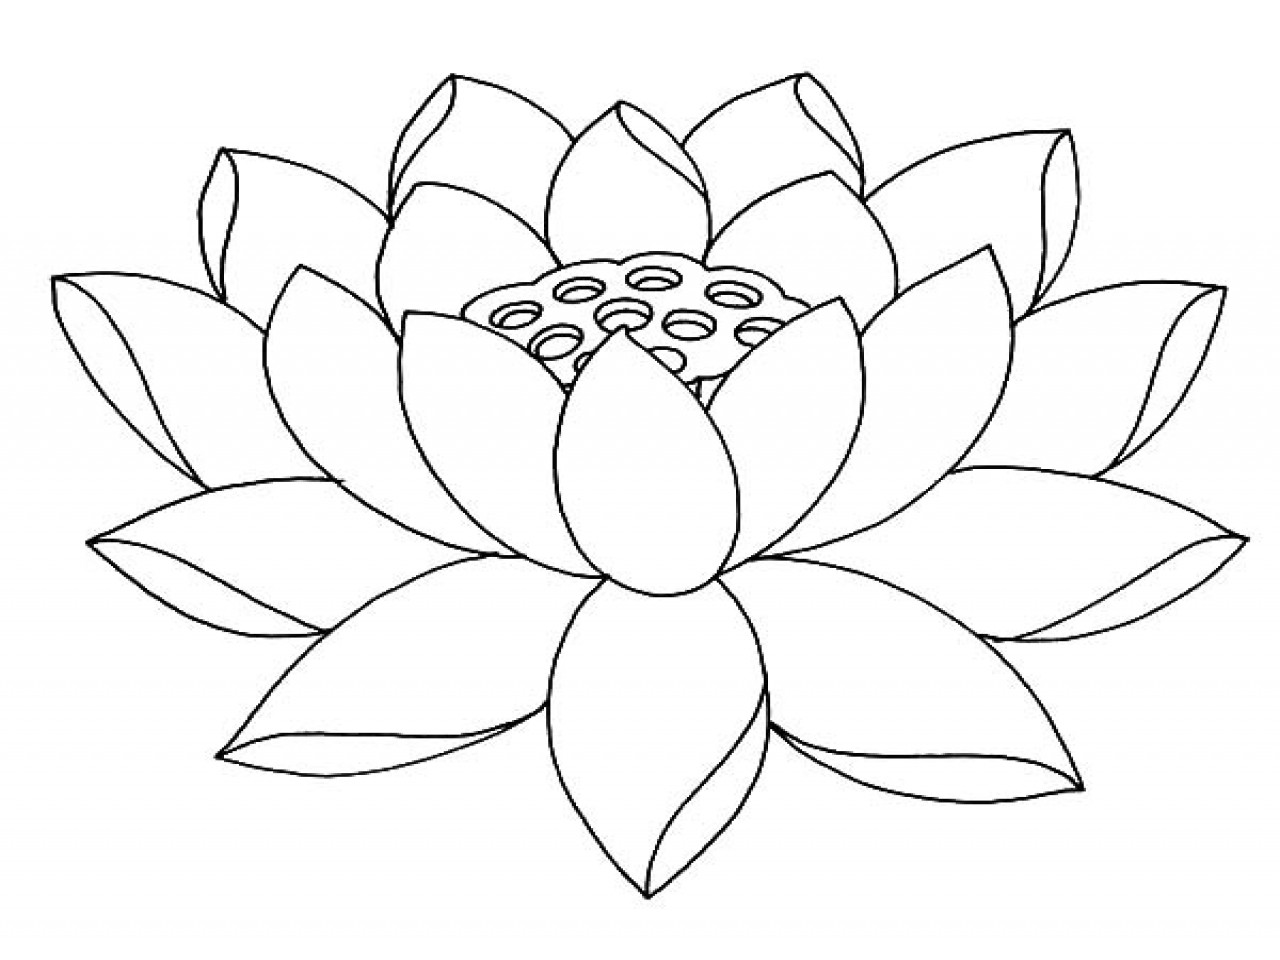 Lotus Coloring Pages at GetColorings.com | Free printable colorings